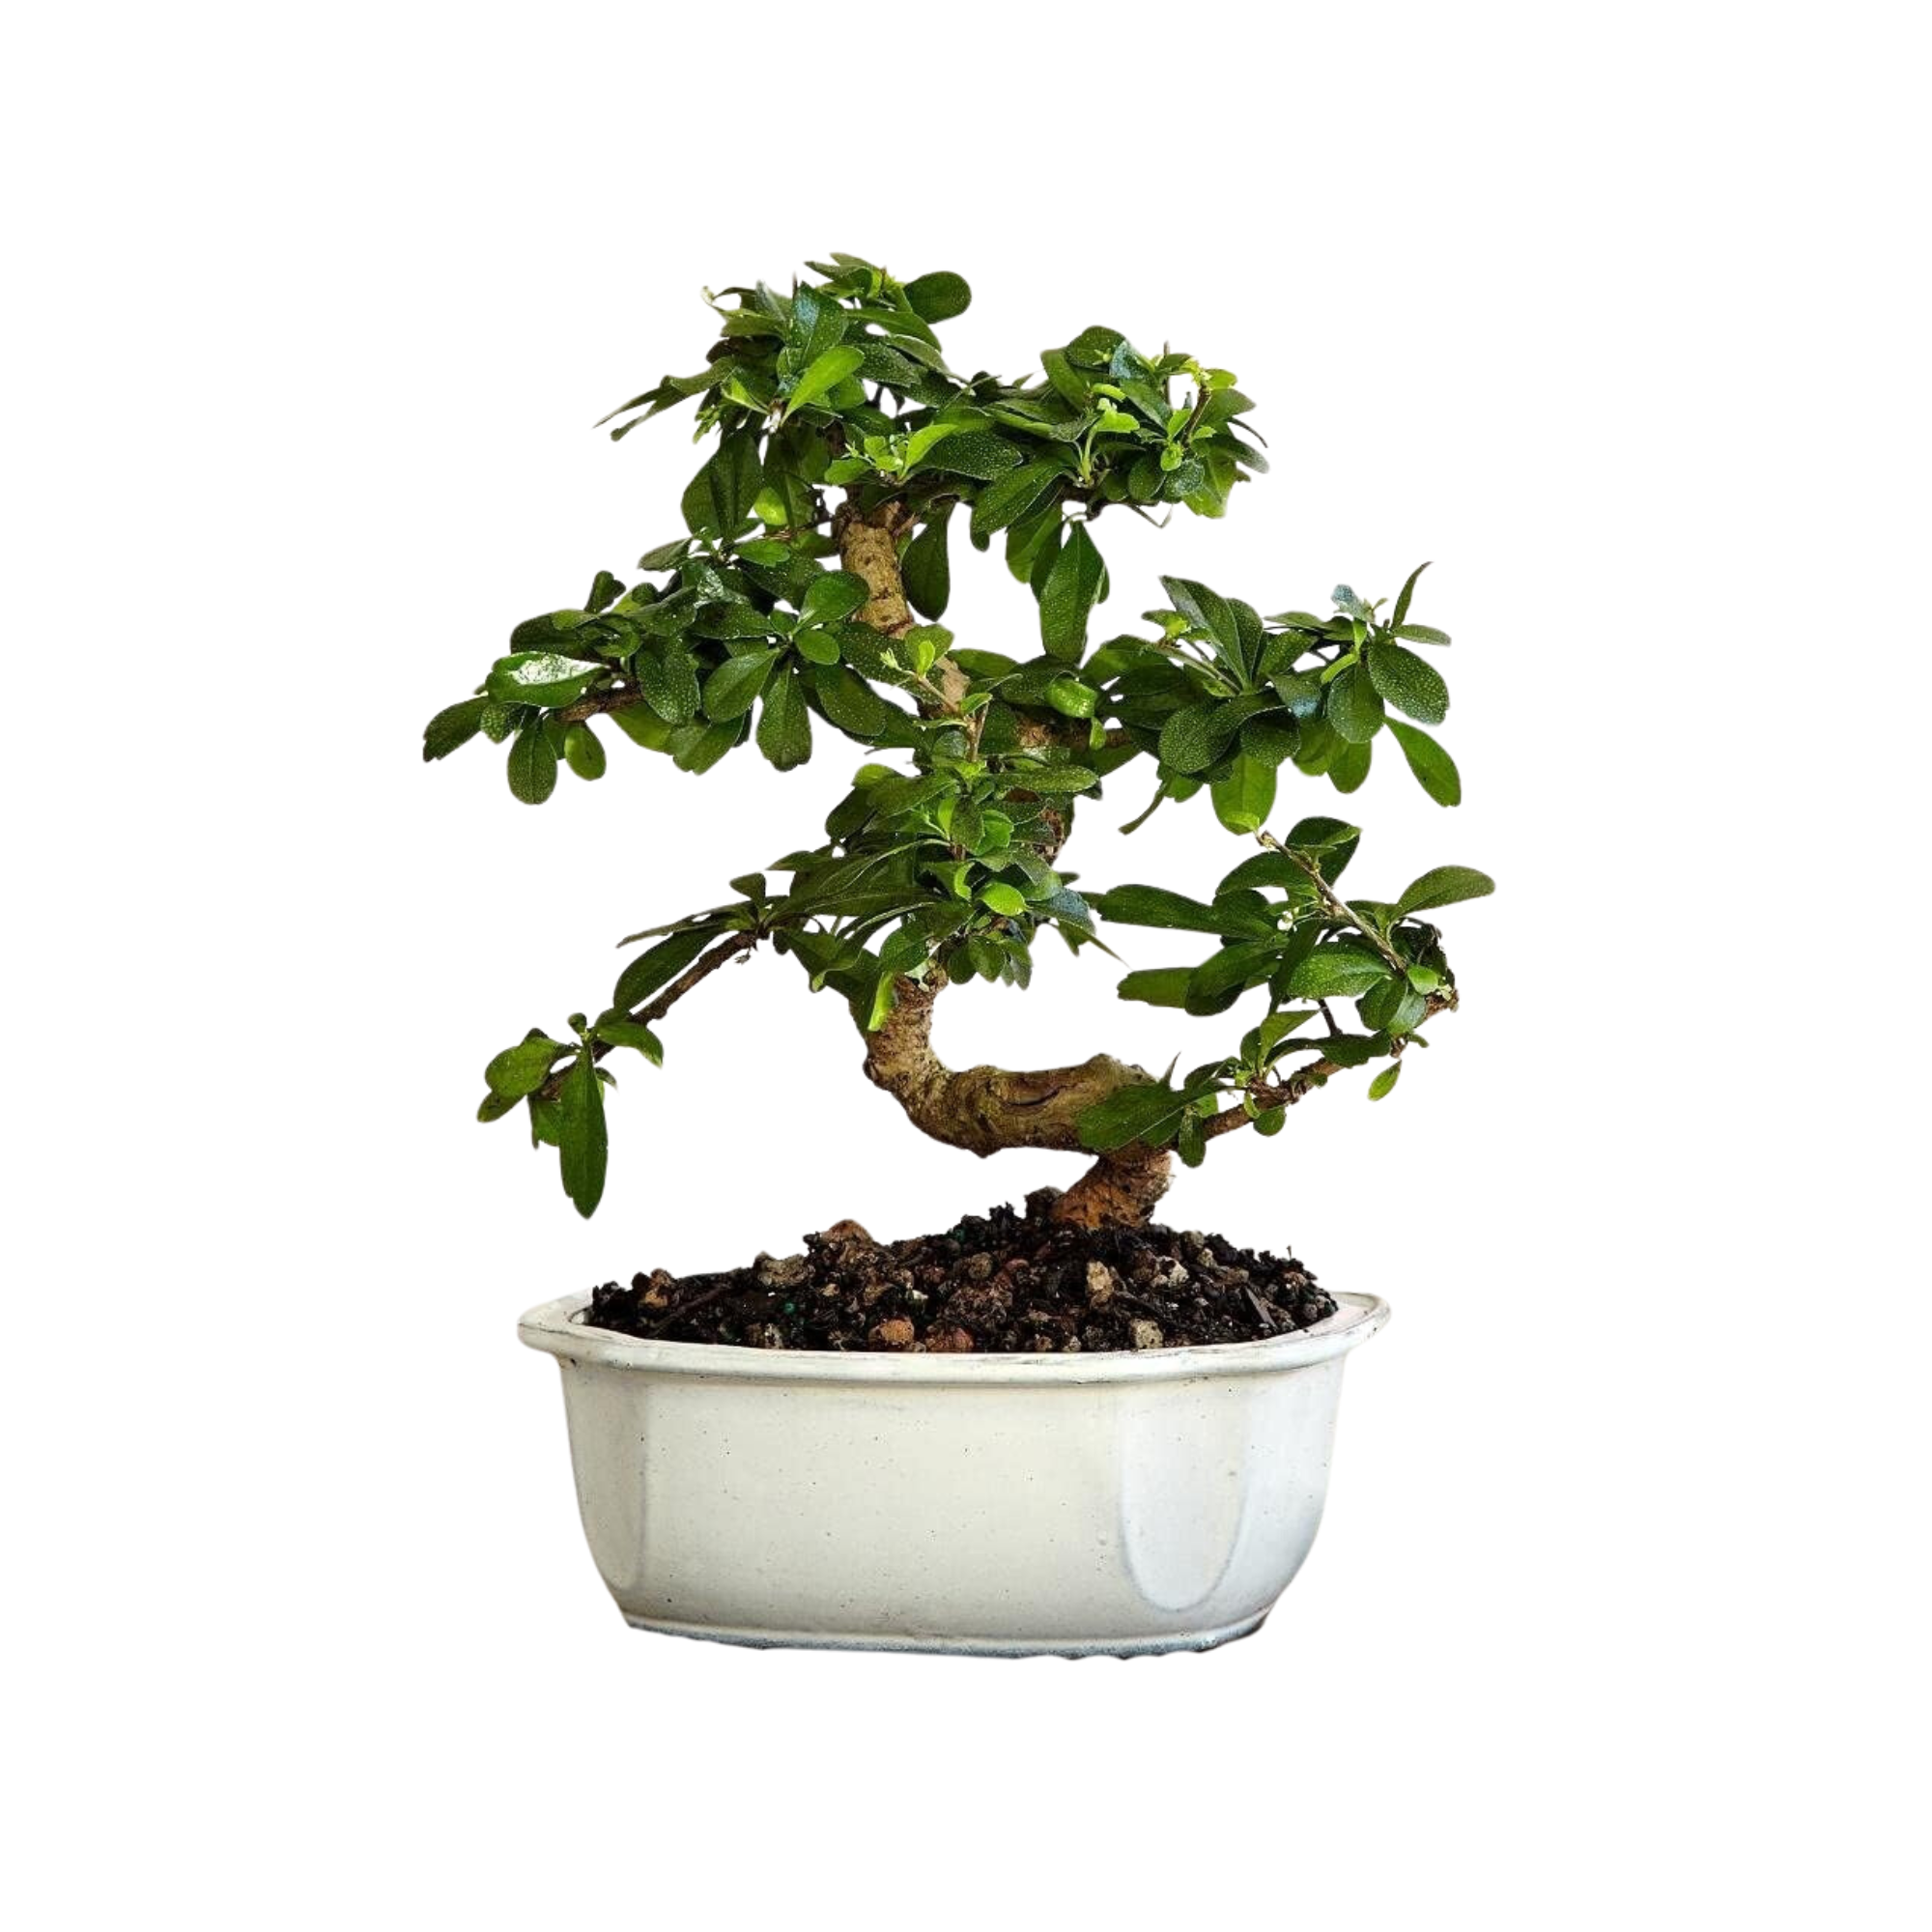 A bonsai tree in a ceramic planter